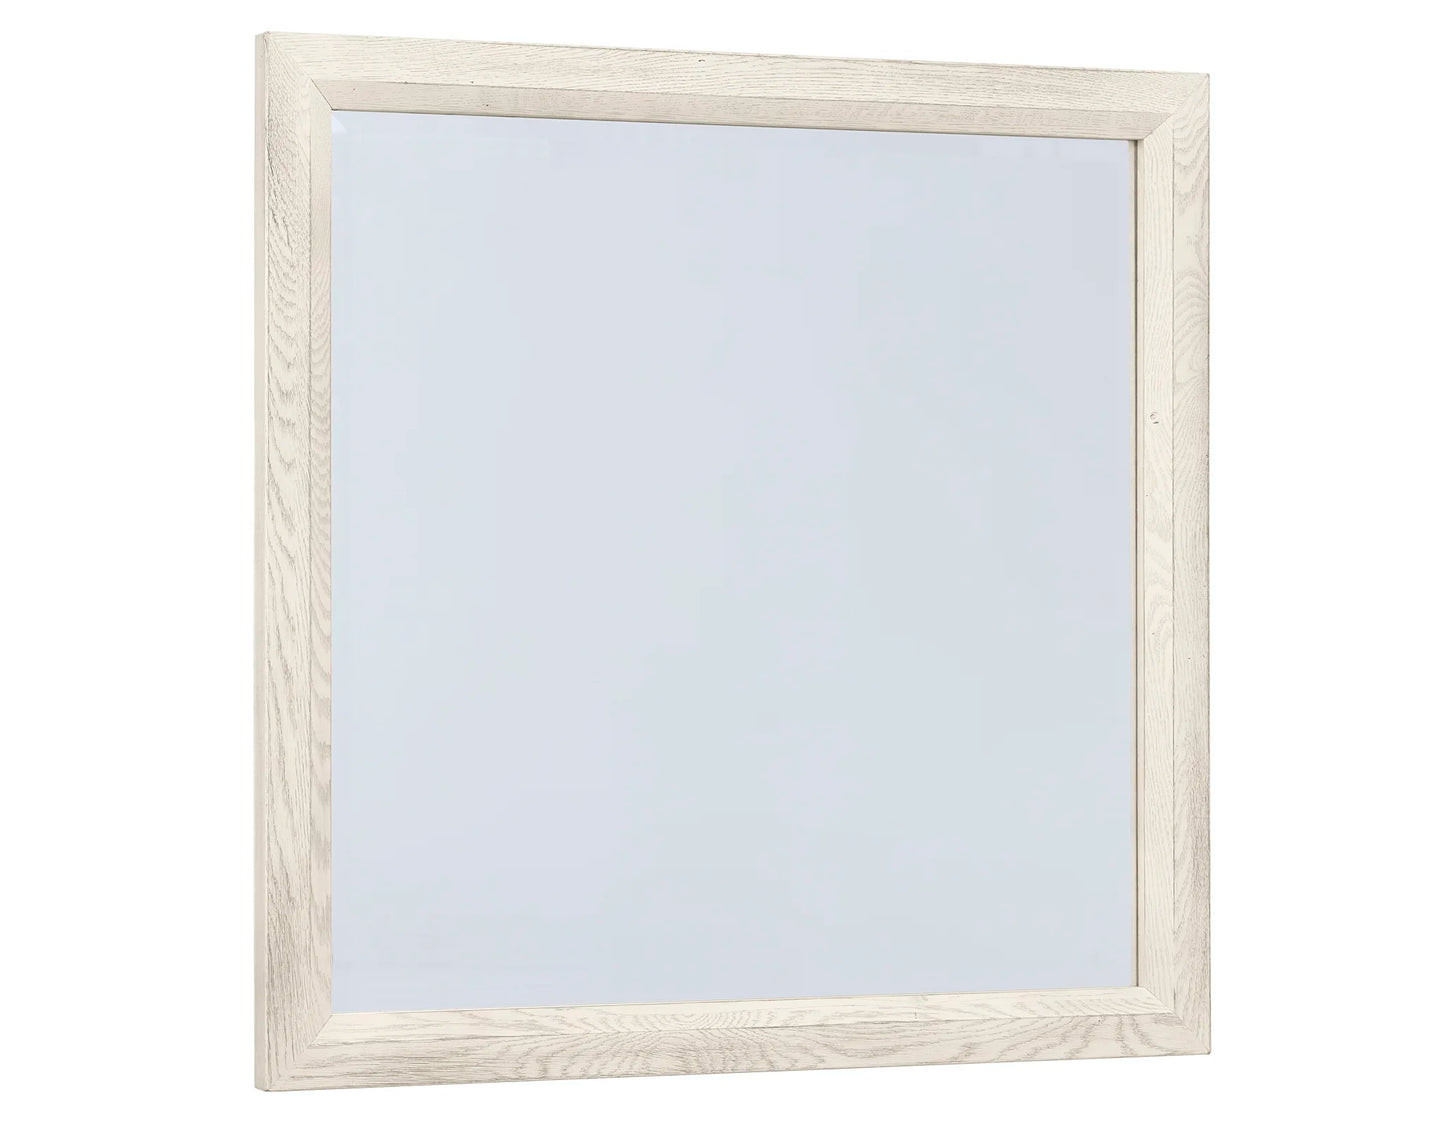 Custom Express - Landscape Mirror Beveled Glass - White